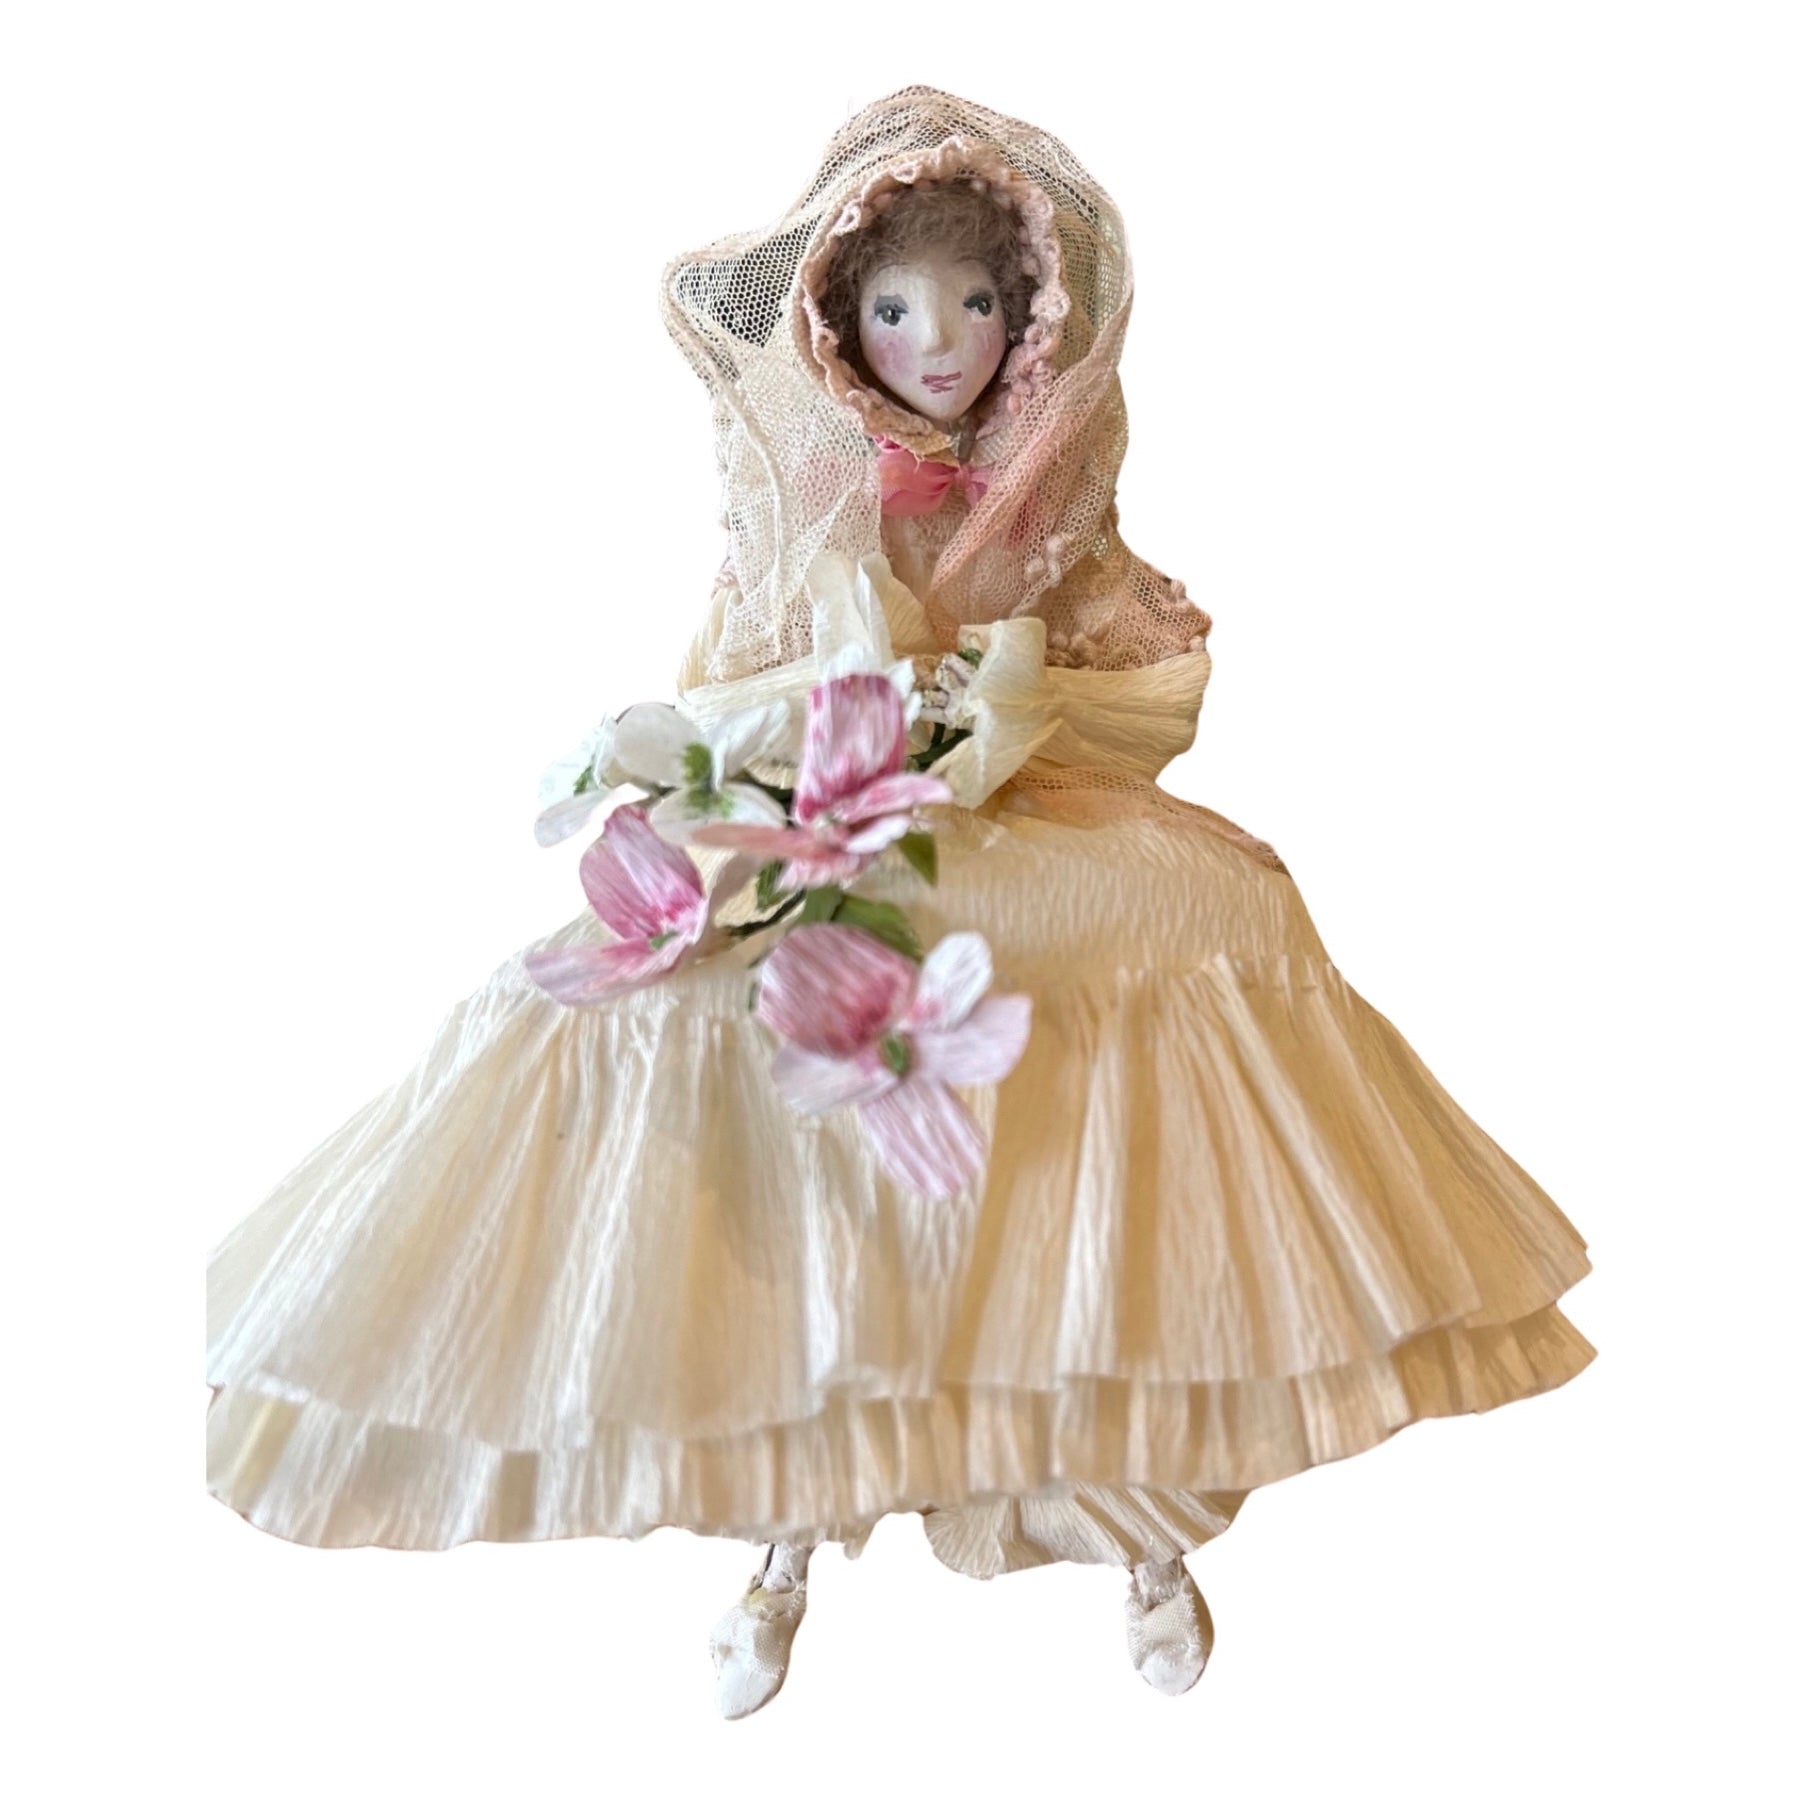 Josette Jane Eyre Bride wearing cream dress